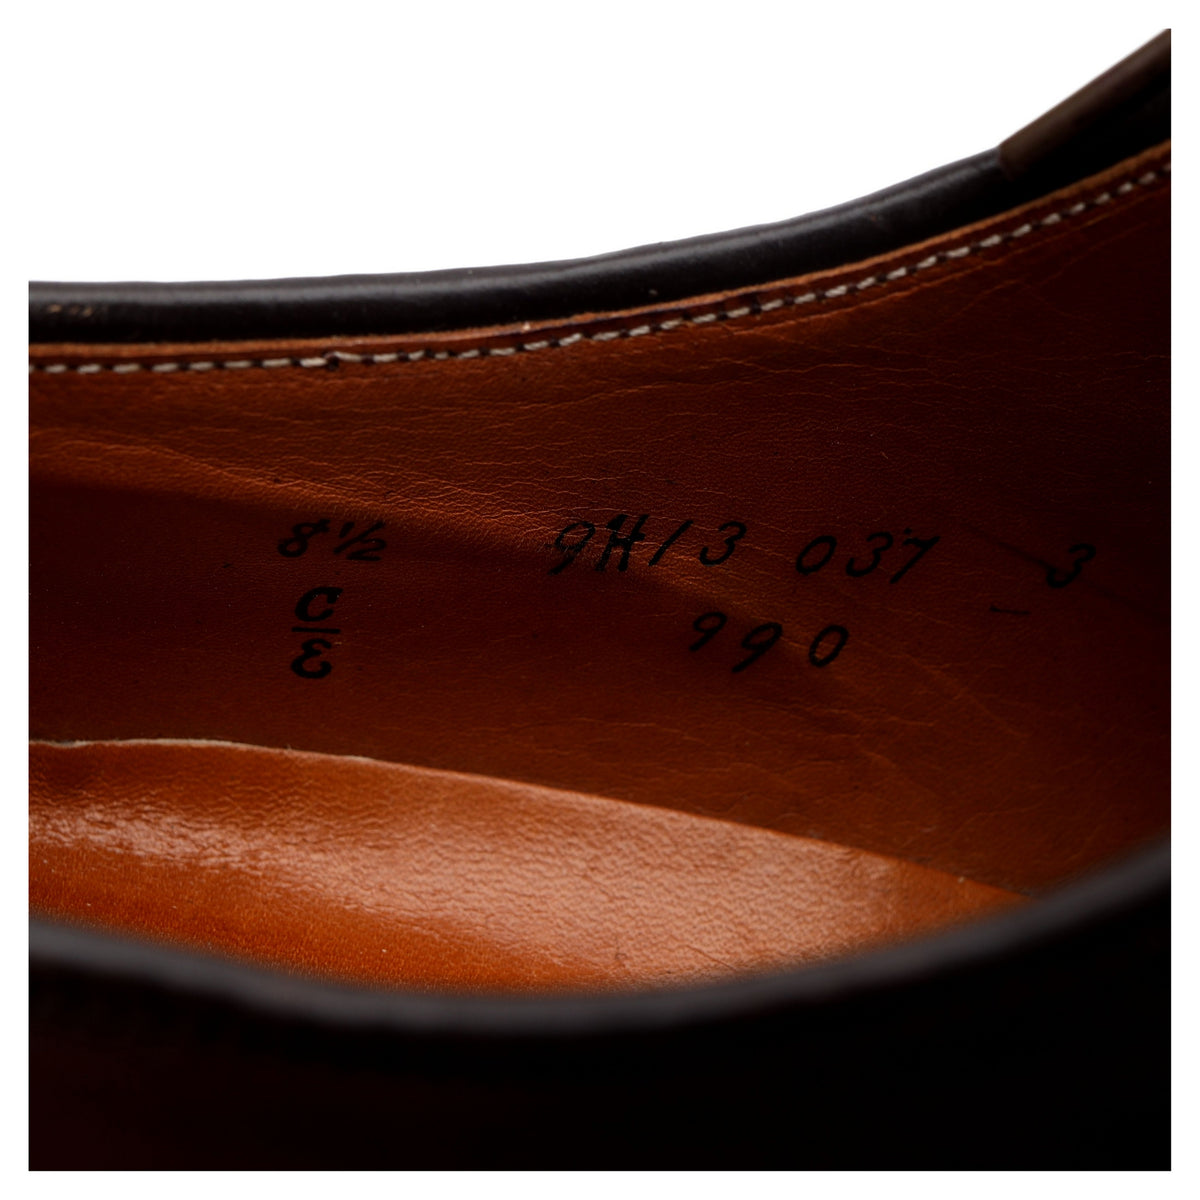 &#39;990&#39; Burgundy Cordovan Leather Derby UK 8 US 8.5